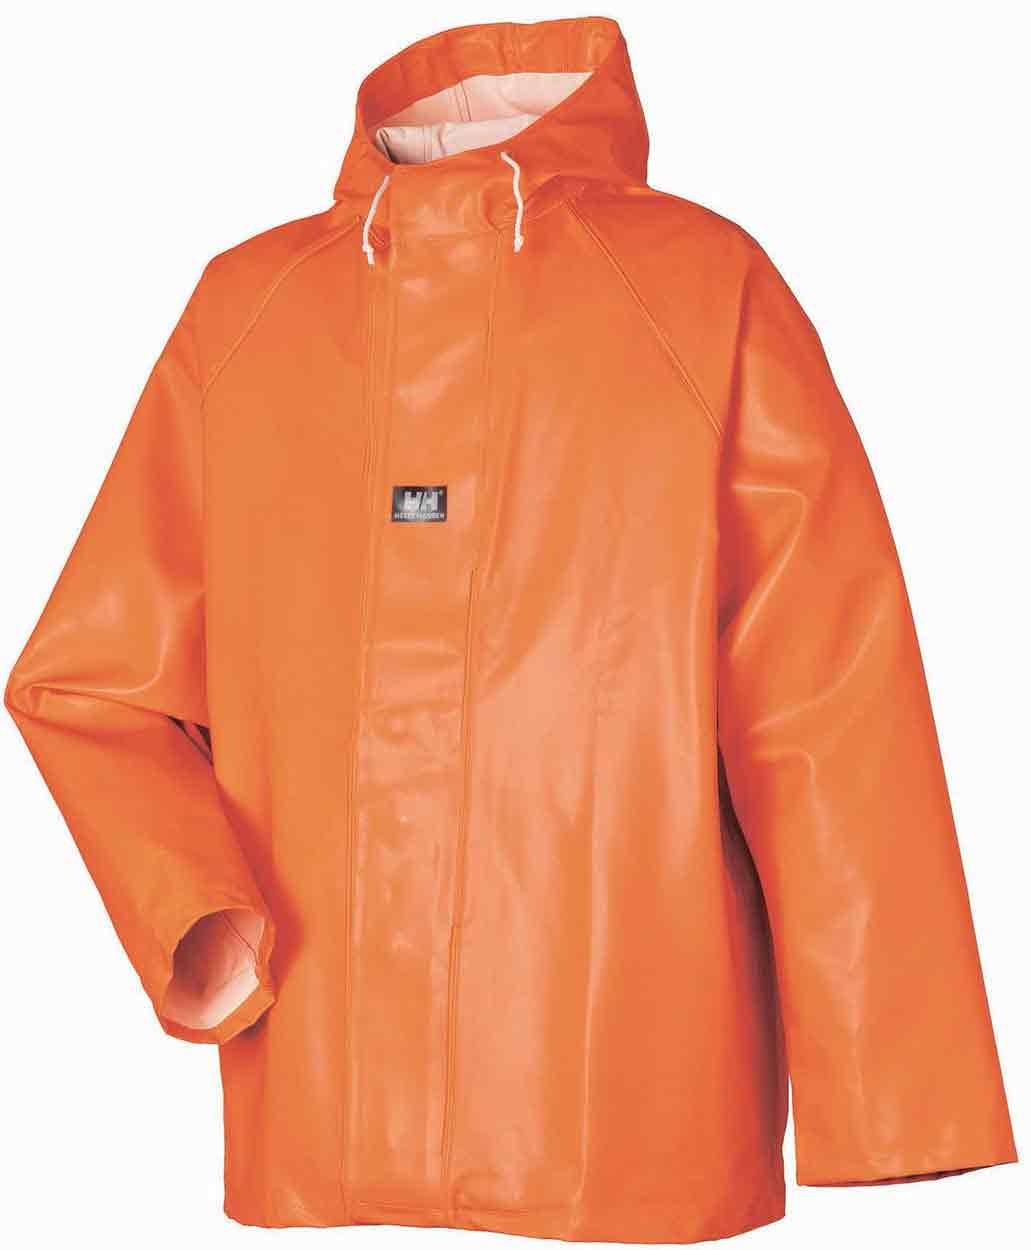 Helly Hansen Stavanger Jacket - Waterproof Work Jackets - Working  Waterproofs - Workwear - Best Workwear